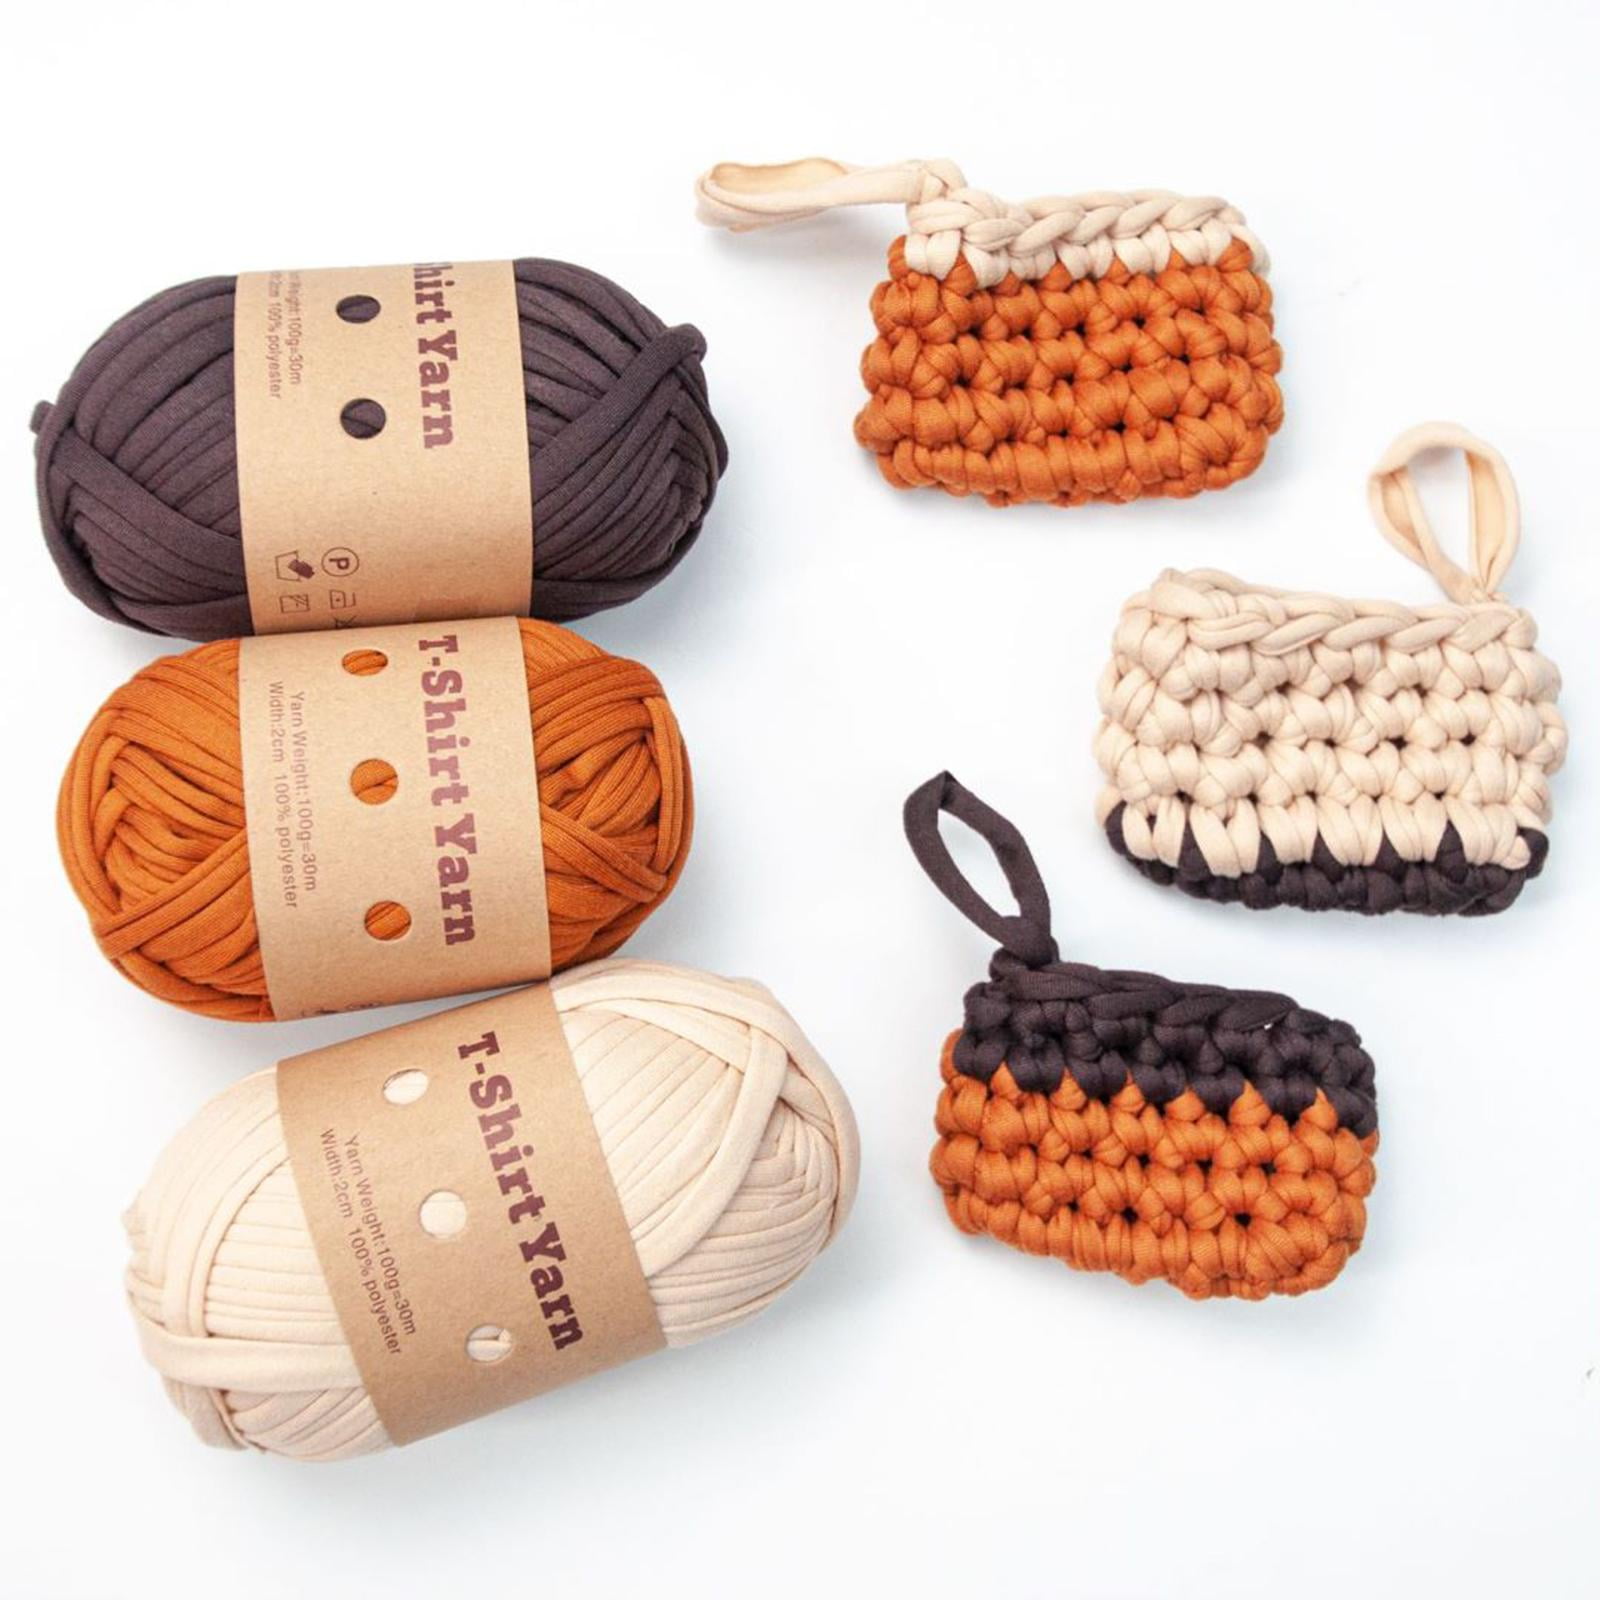  JeogYong T-Shirt Yarn, 400g/131 Yards Super Soft Fabric Crochet  Cloth T Shirt Yarn, Thick Hand Knitting Yarn for Crocheting  Bags/Baskets/Rugs, Home Decor, DIY Crafts (Orange)